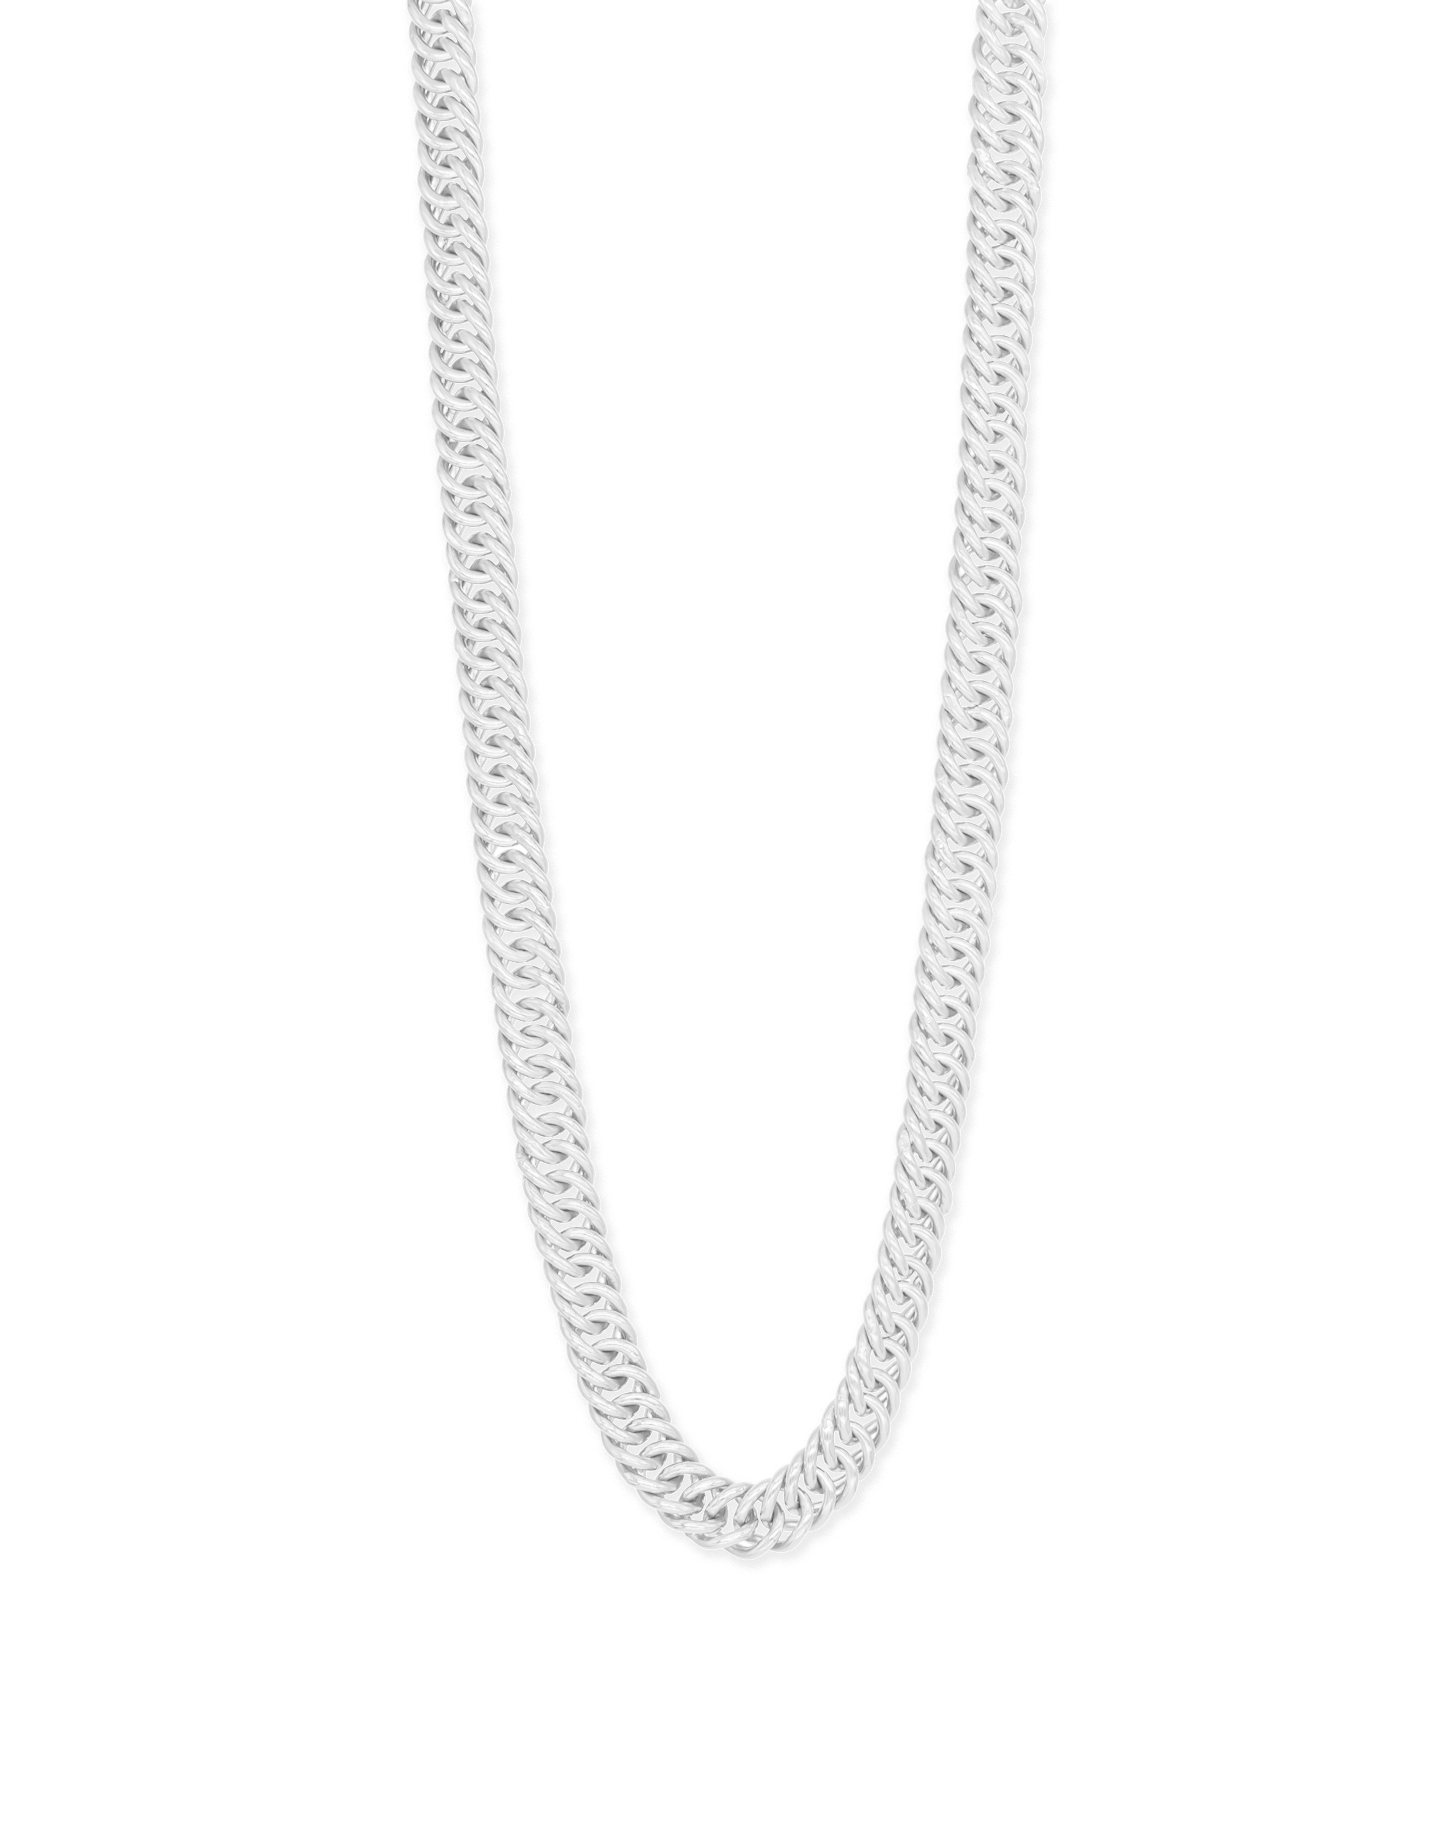 10K Yellow Gold Foxtail Chain Necklace 20 inch - AU648B | JTV.com